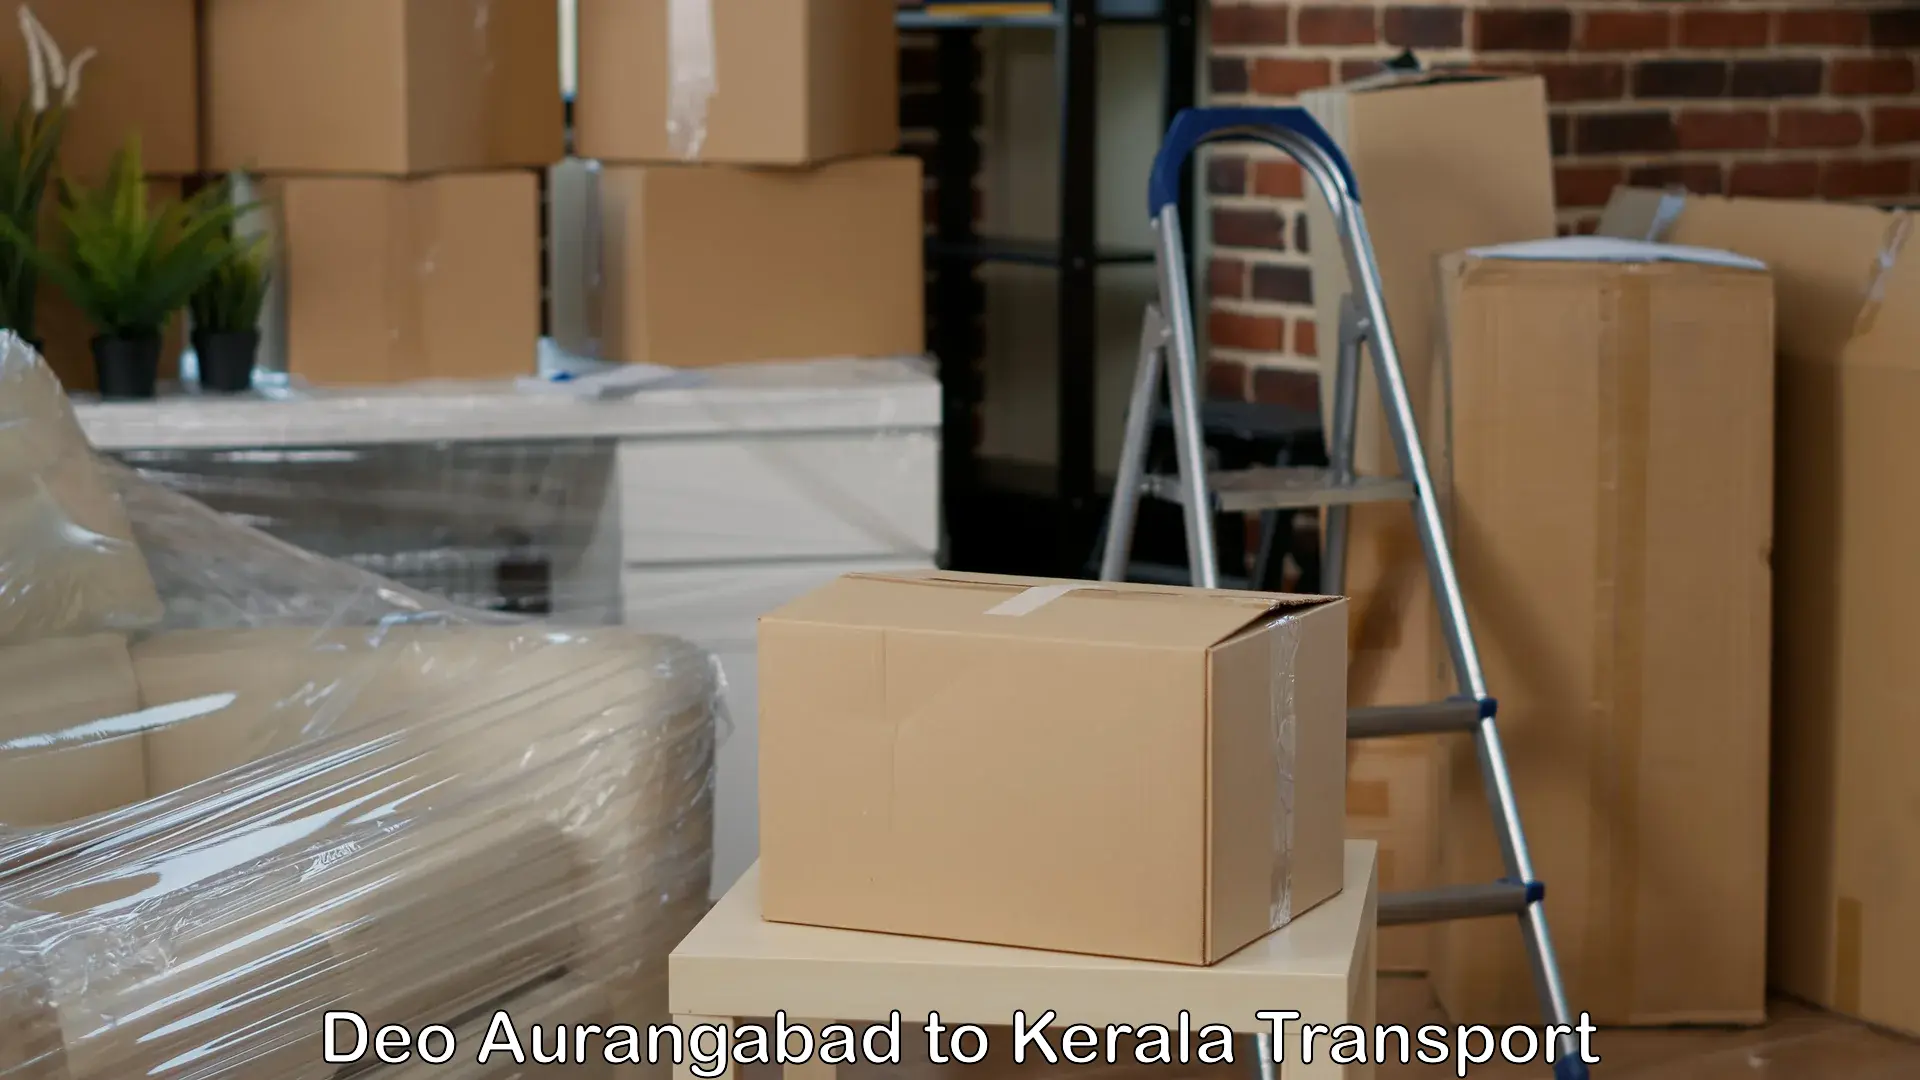 Furniture transport service Deo Aurangabad to Malappuram